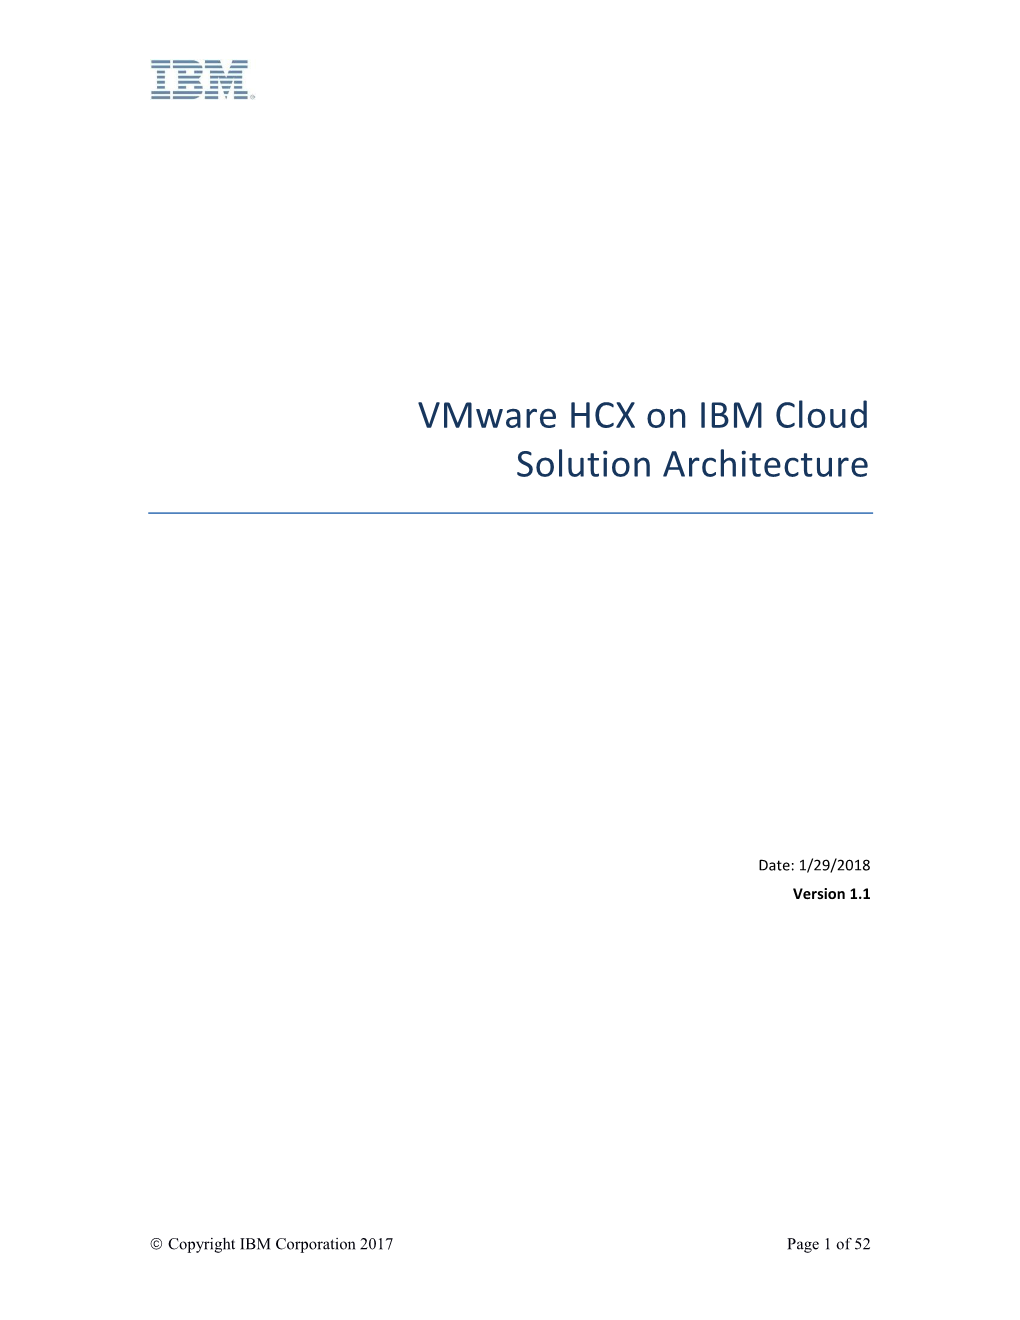 Vmware HCX on IBM Cloud Solution Architecture